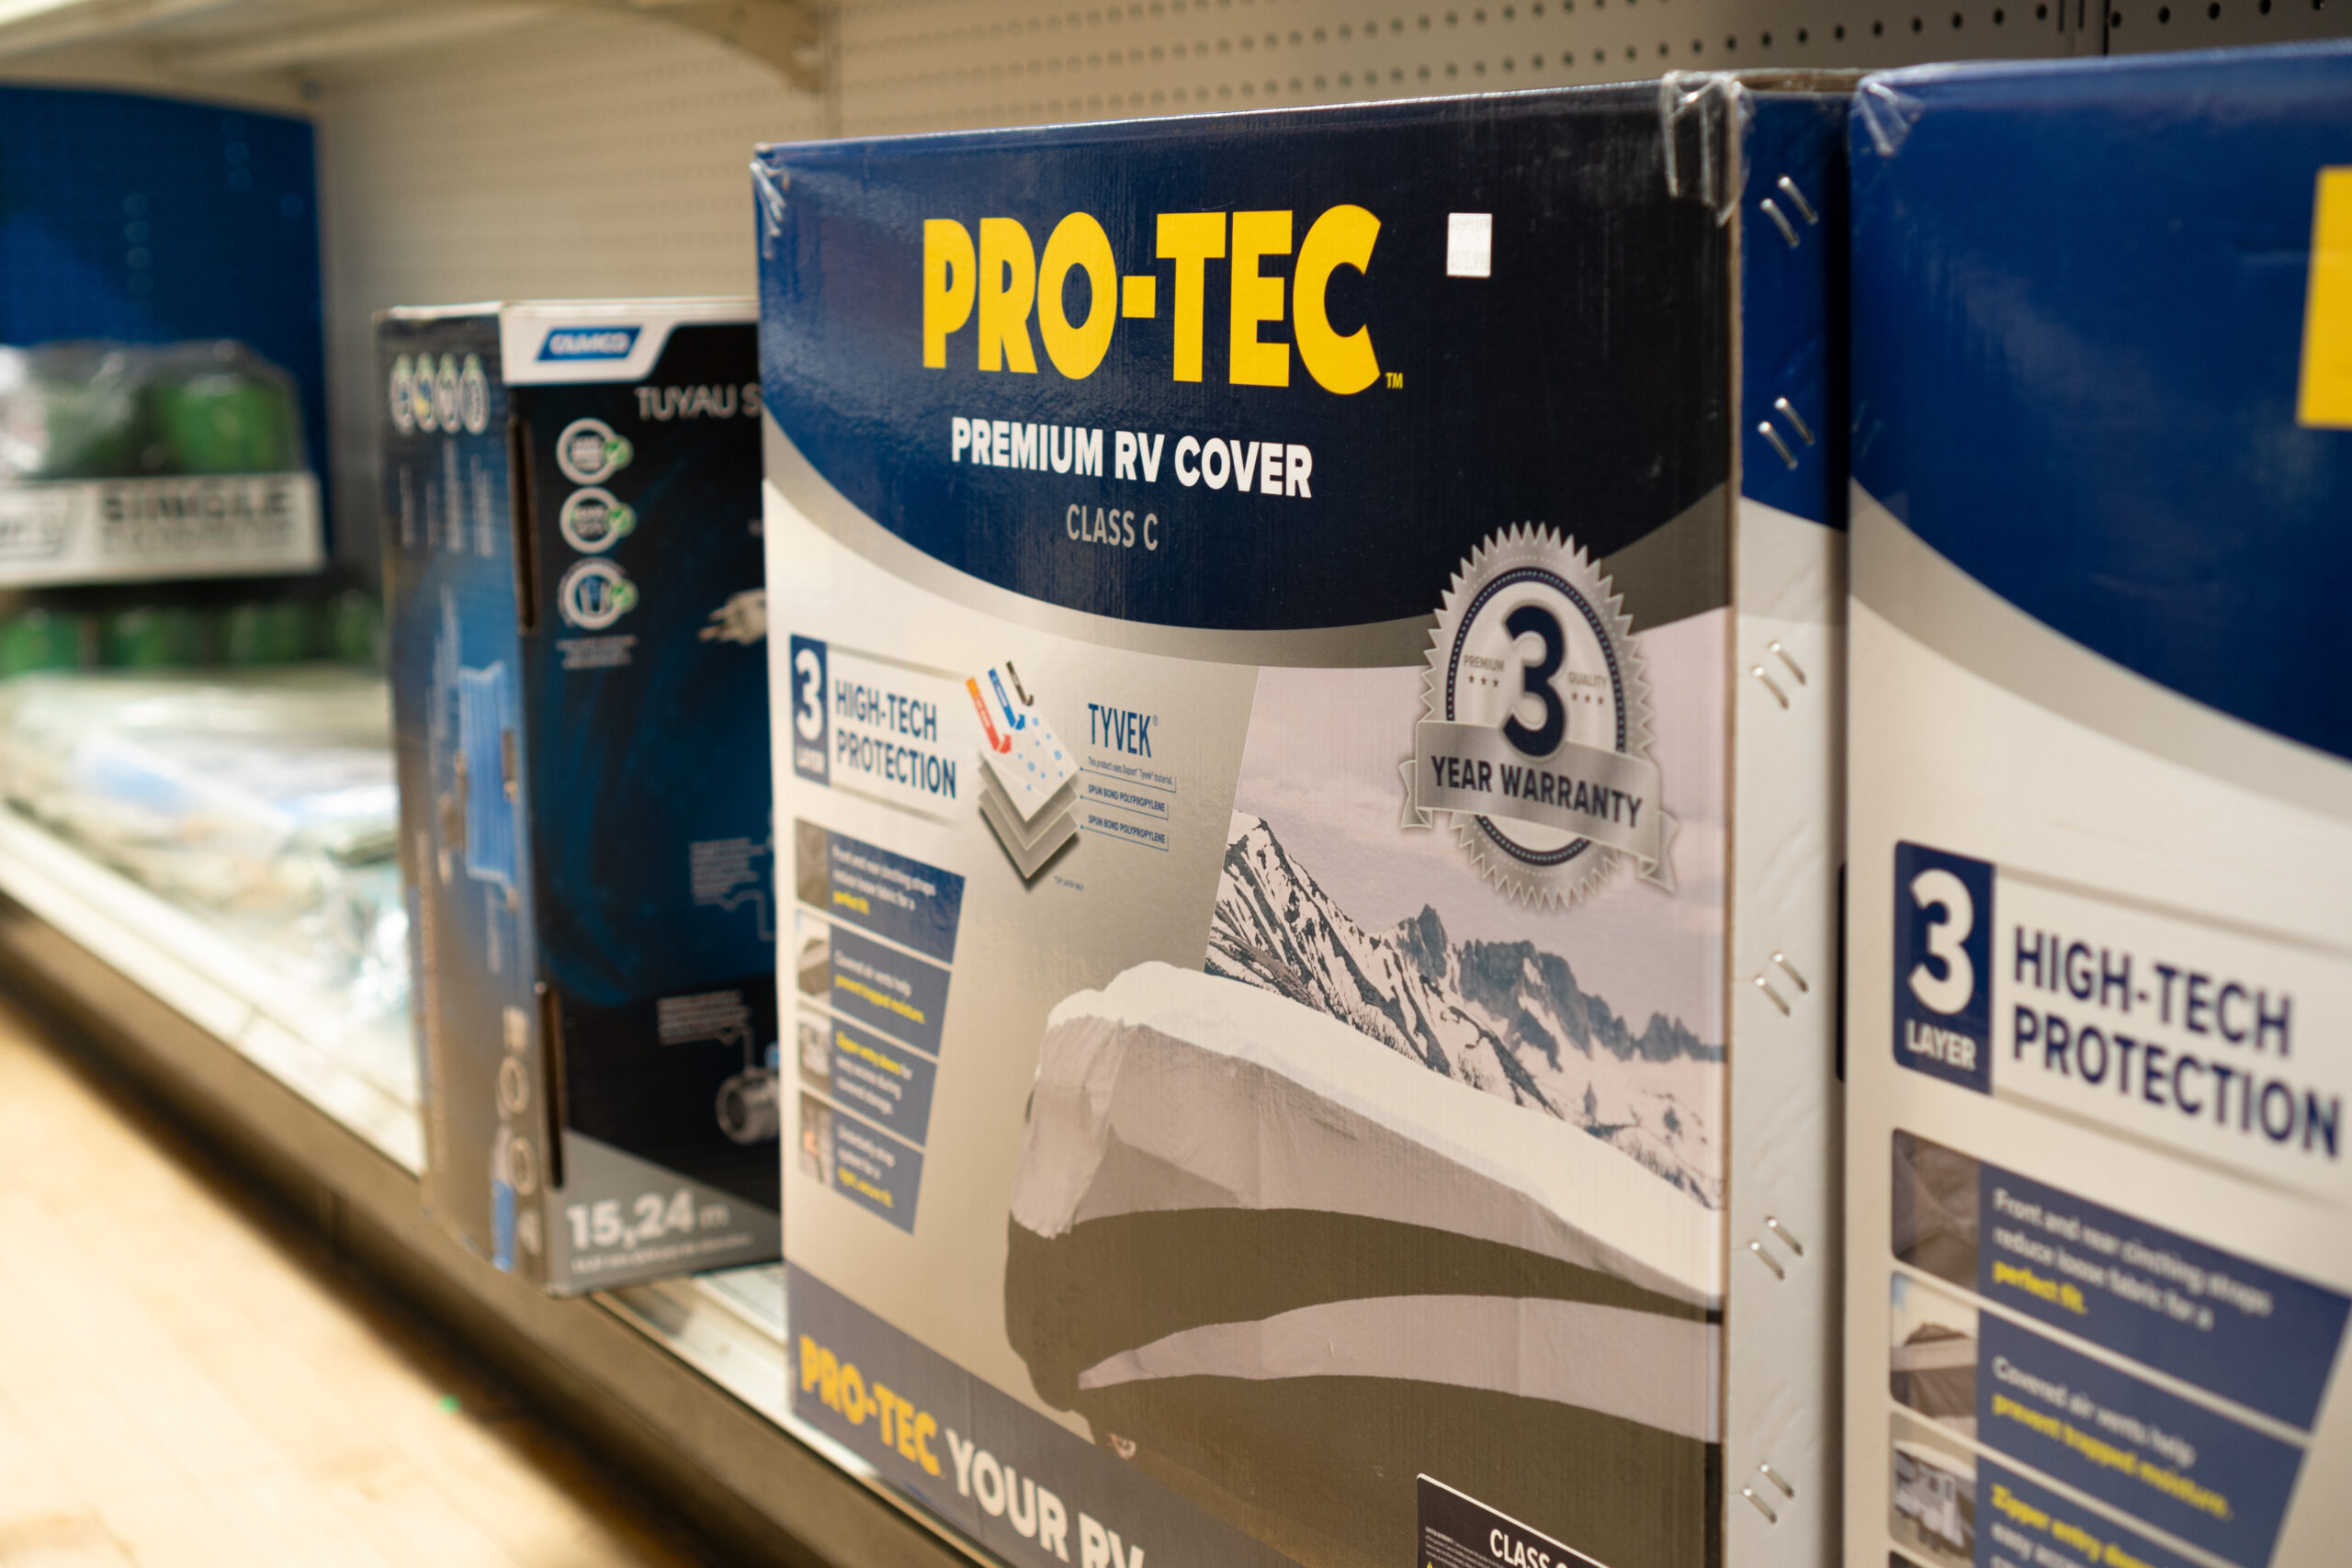 Pro-Tec Premium RV Cover | Sold at Four Star Supply